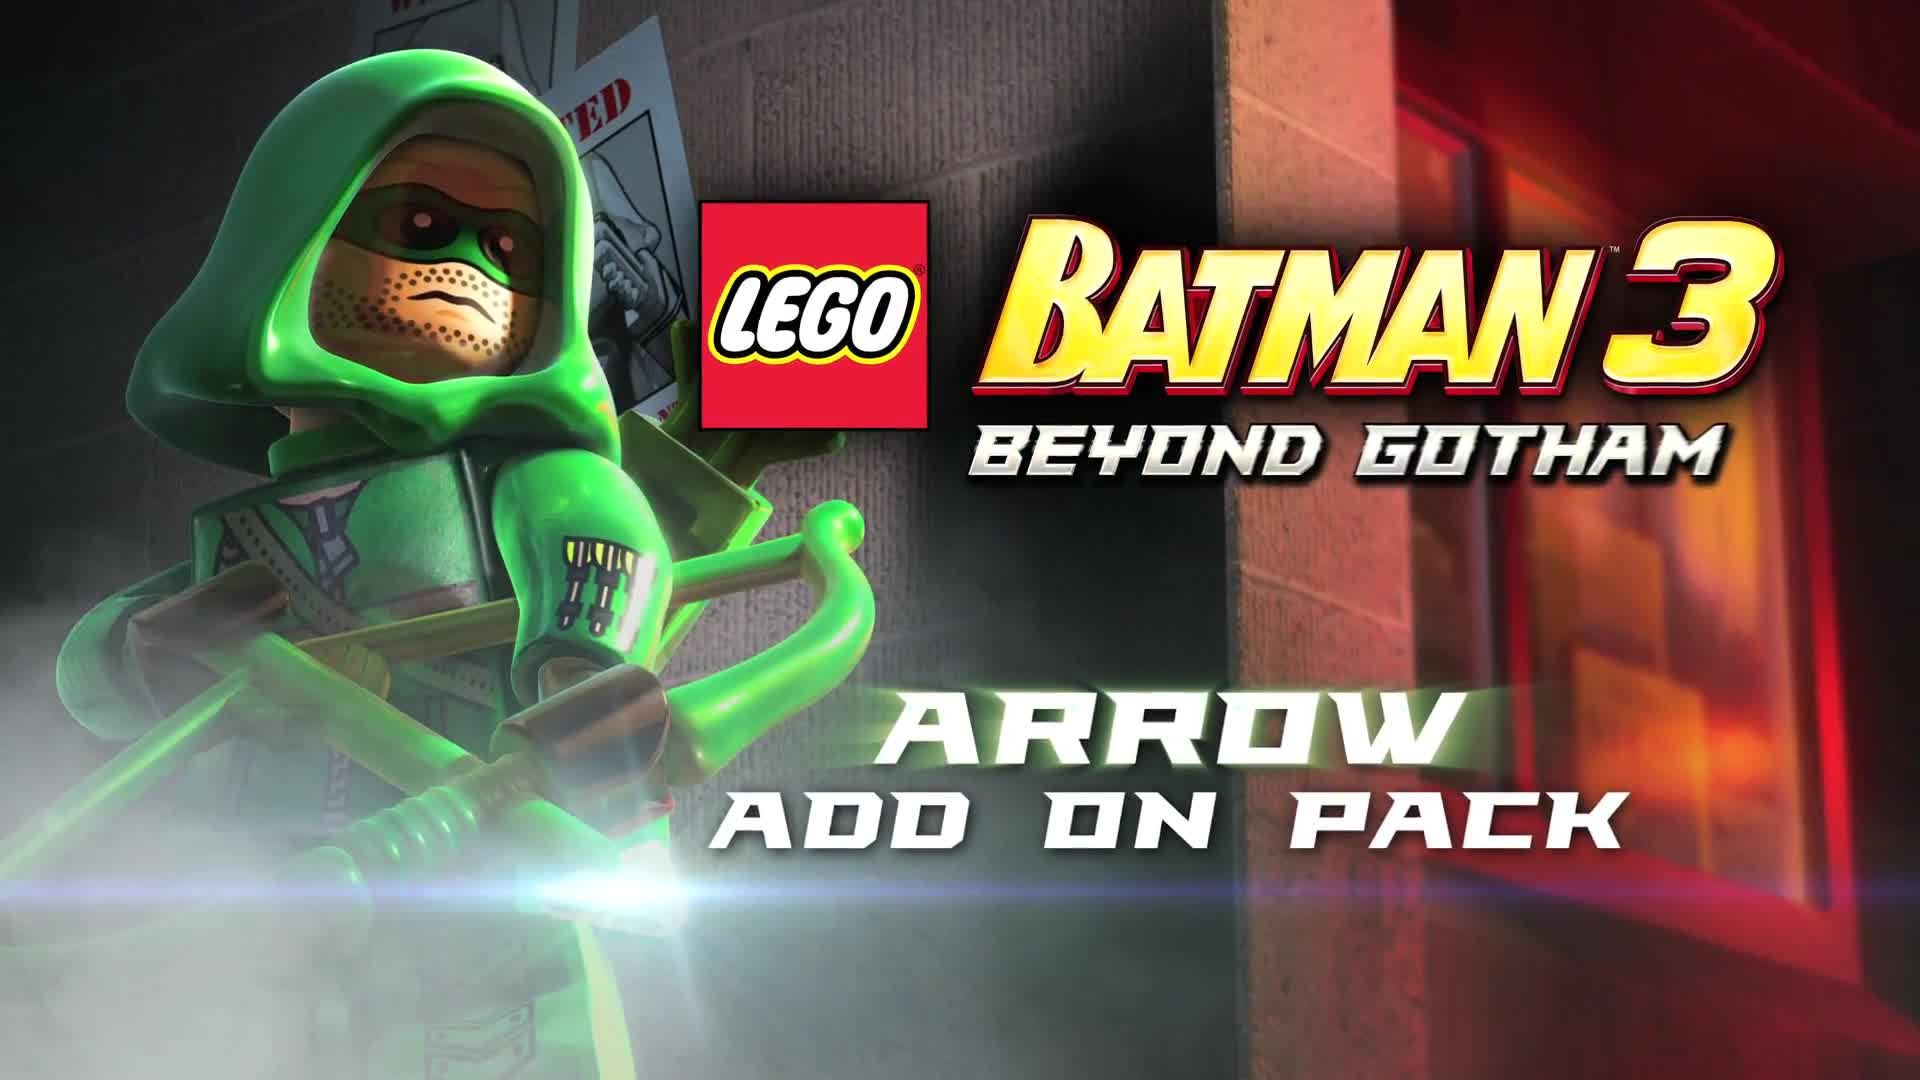 LEGO Batman 3 Arrow Pack DLC - Official Launch Trailer (2015) [EN] HD -  video Dailymotion